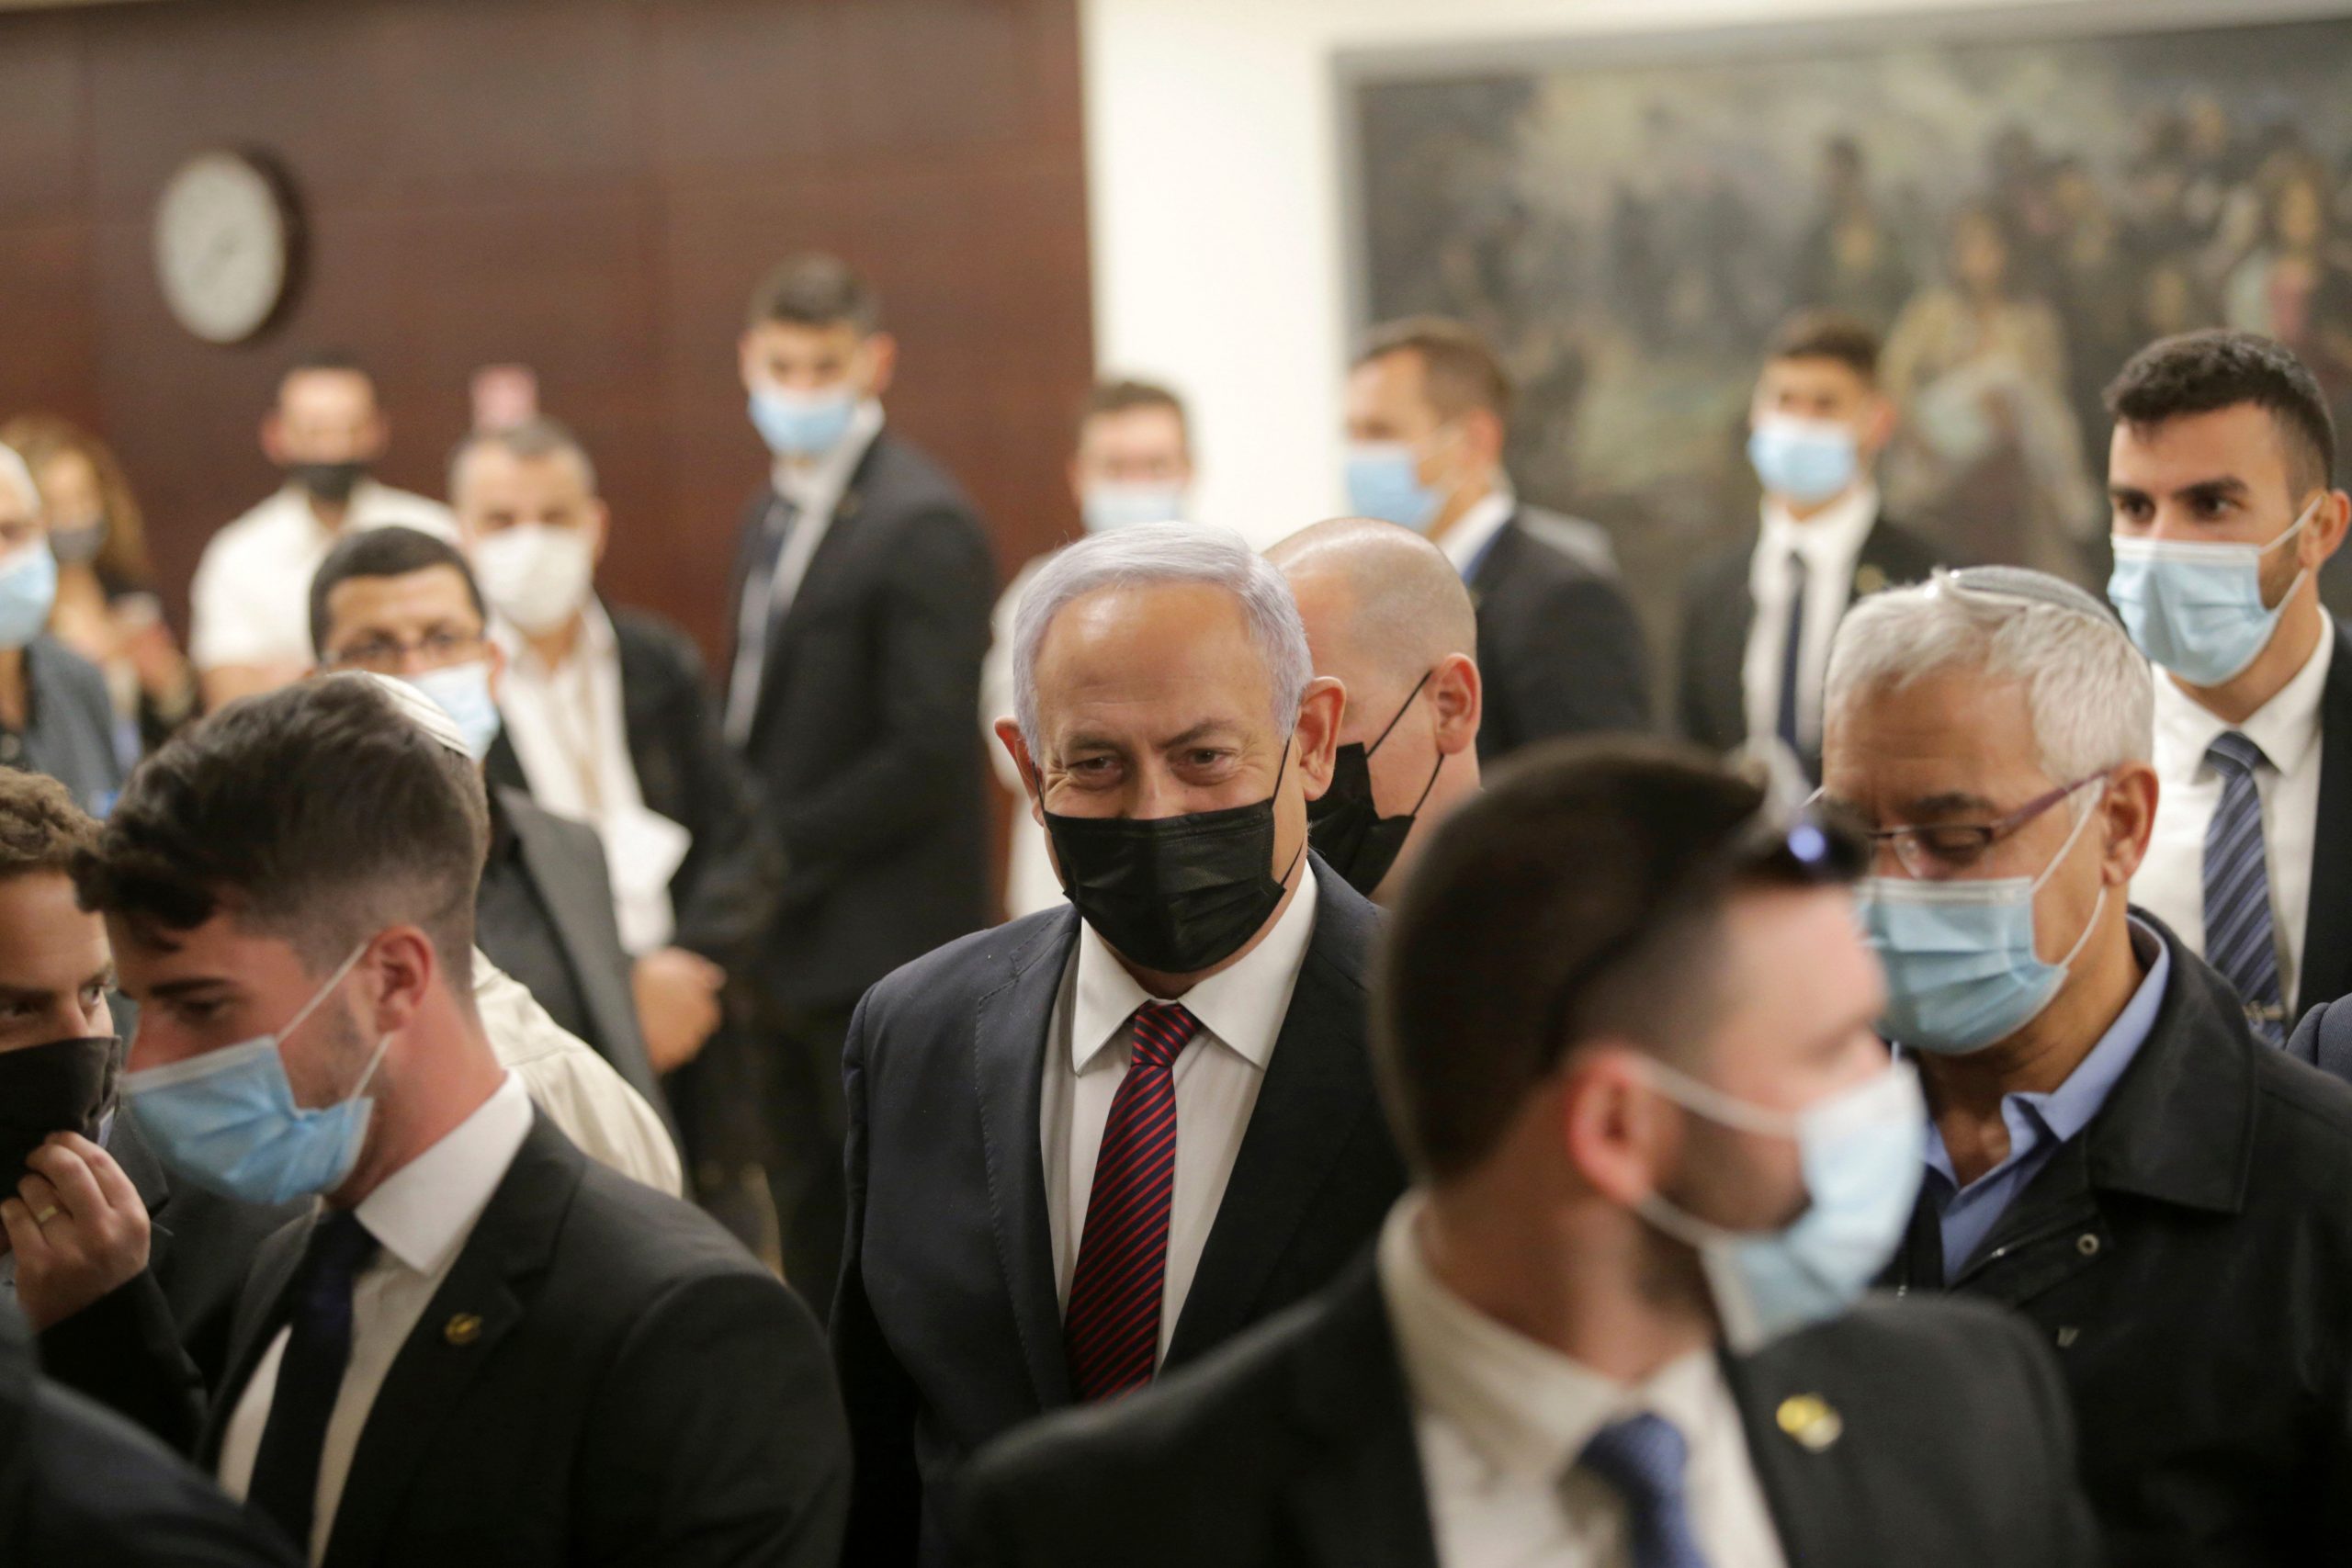 ‘Will fight perversion of justice’: Israel PM Benjamin Netanyahu on anti-Semitic ICC ruling